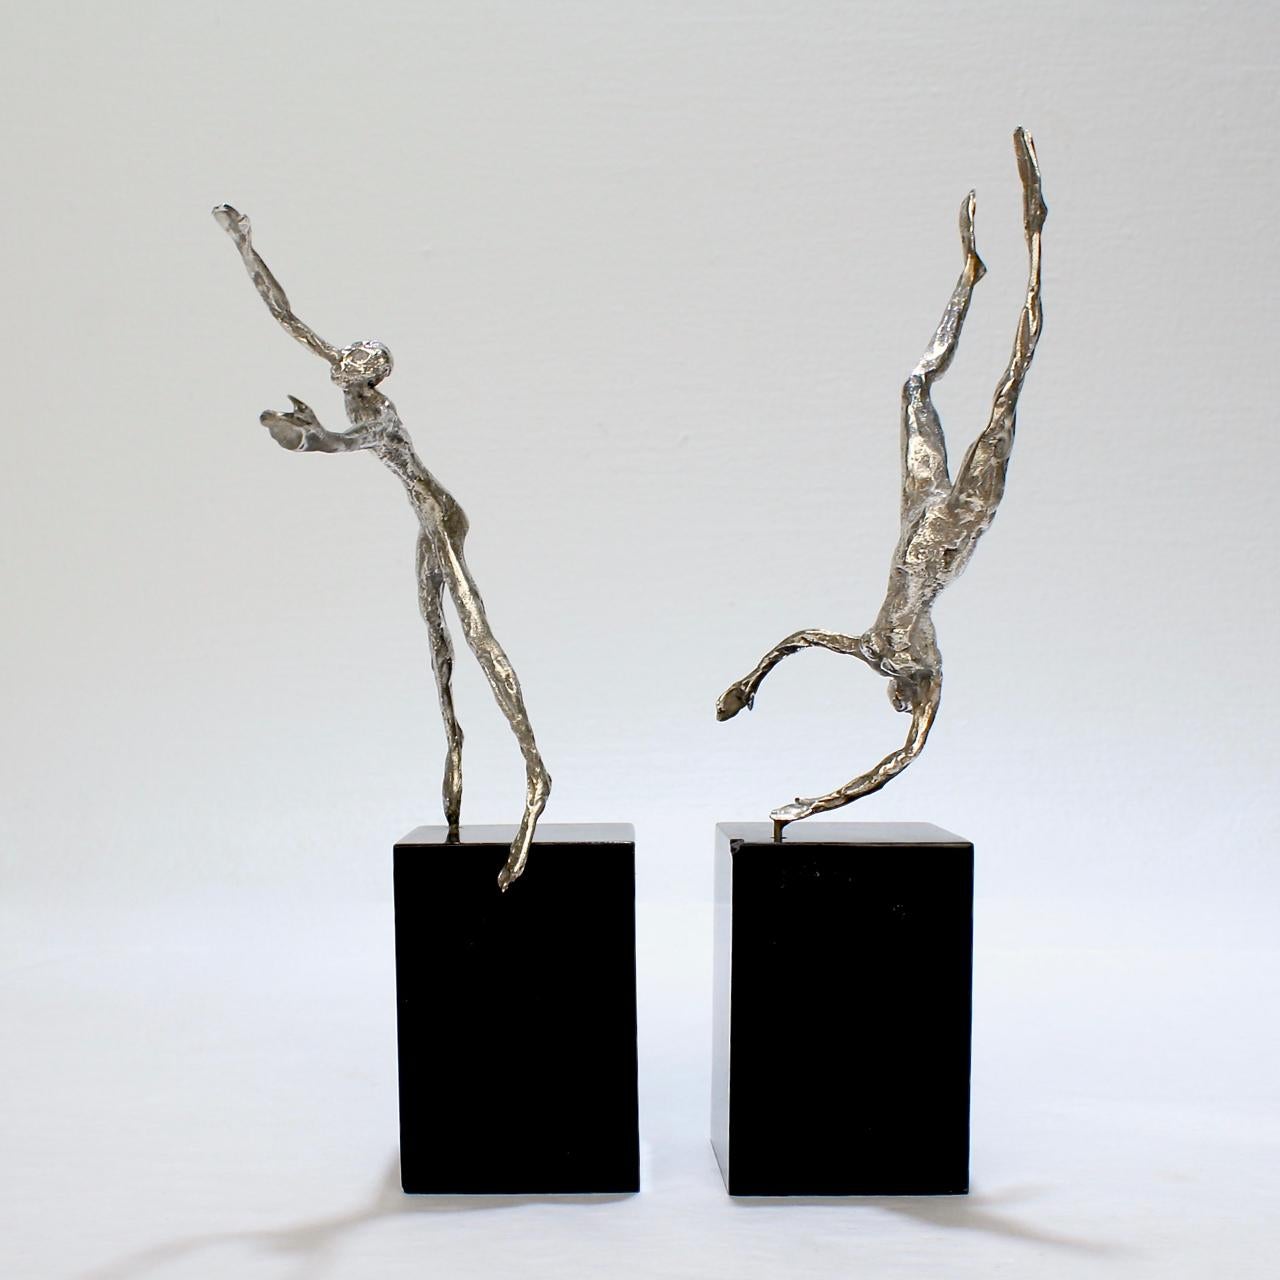 2 Stanley Bleifeld 800 Silver Sculptures Depicting Adam & Eve's Fall from Grace 1